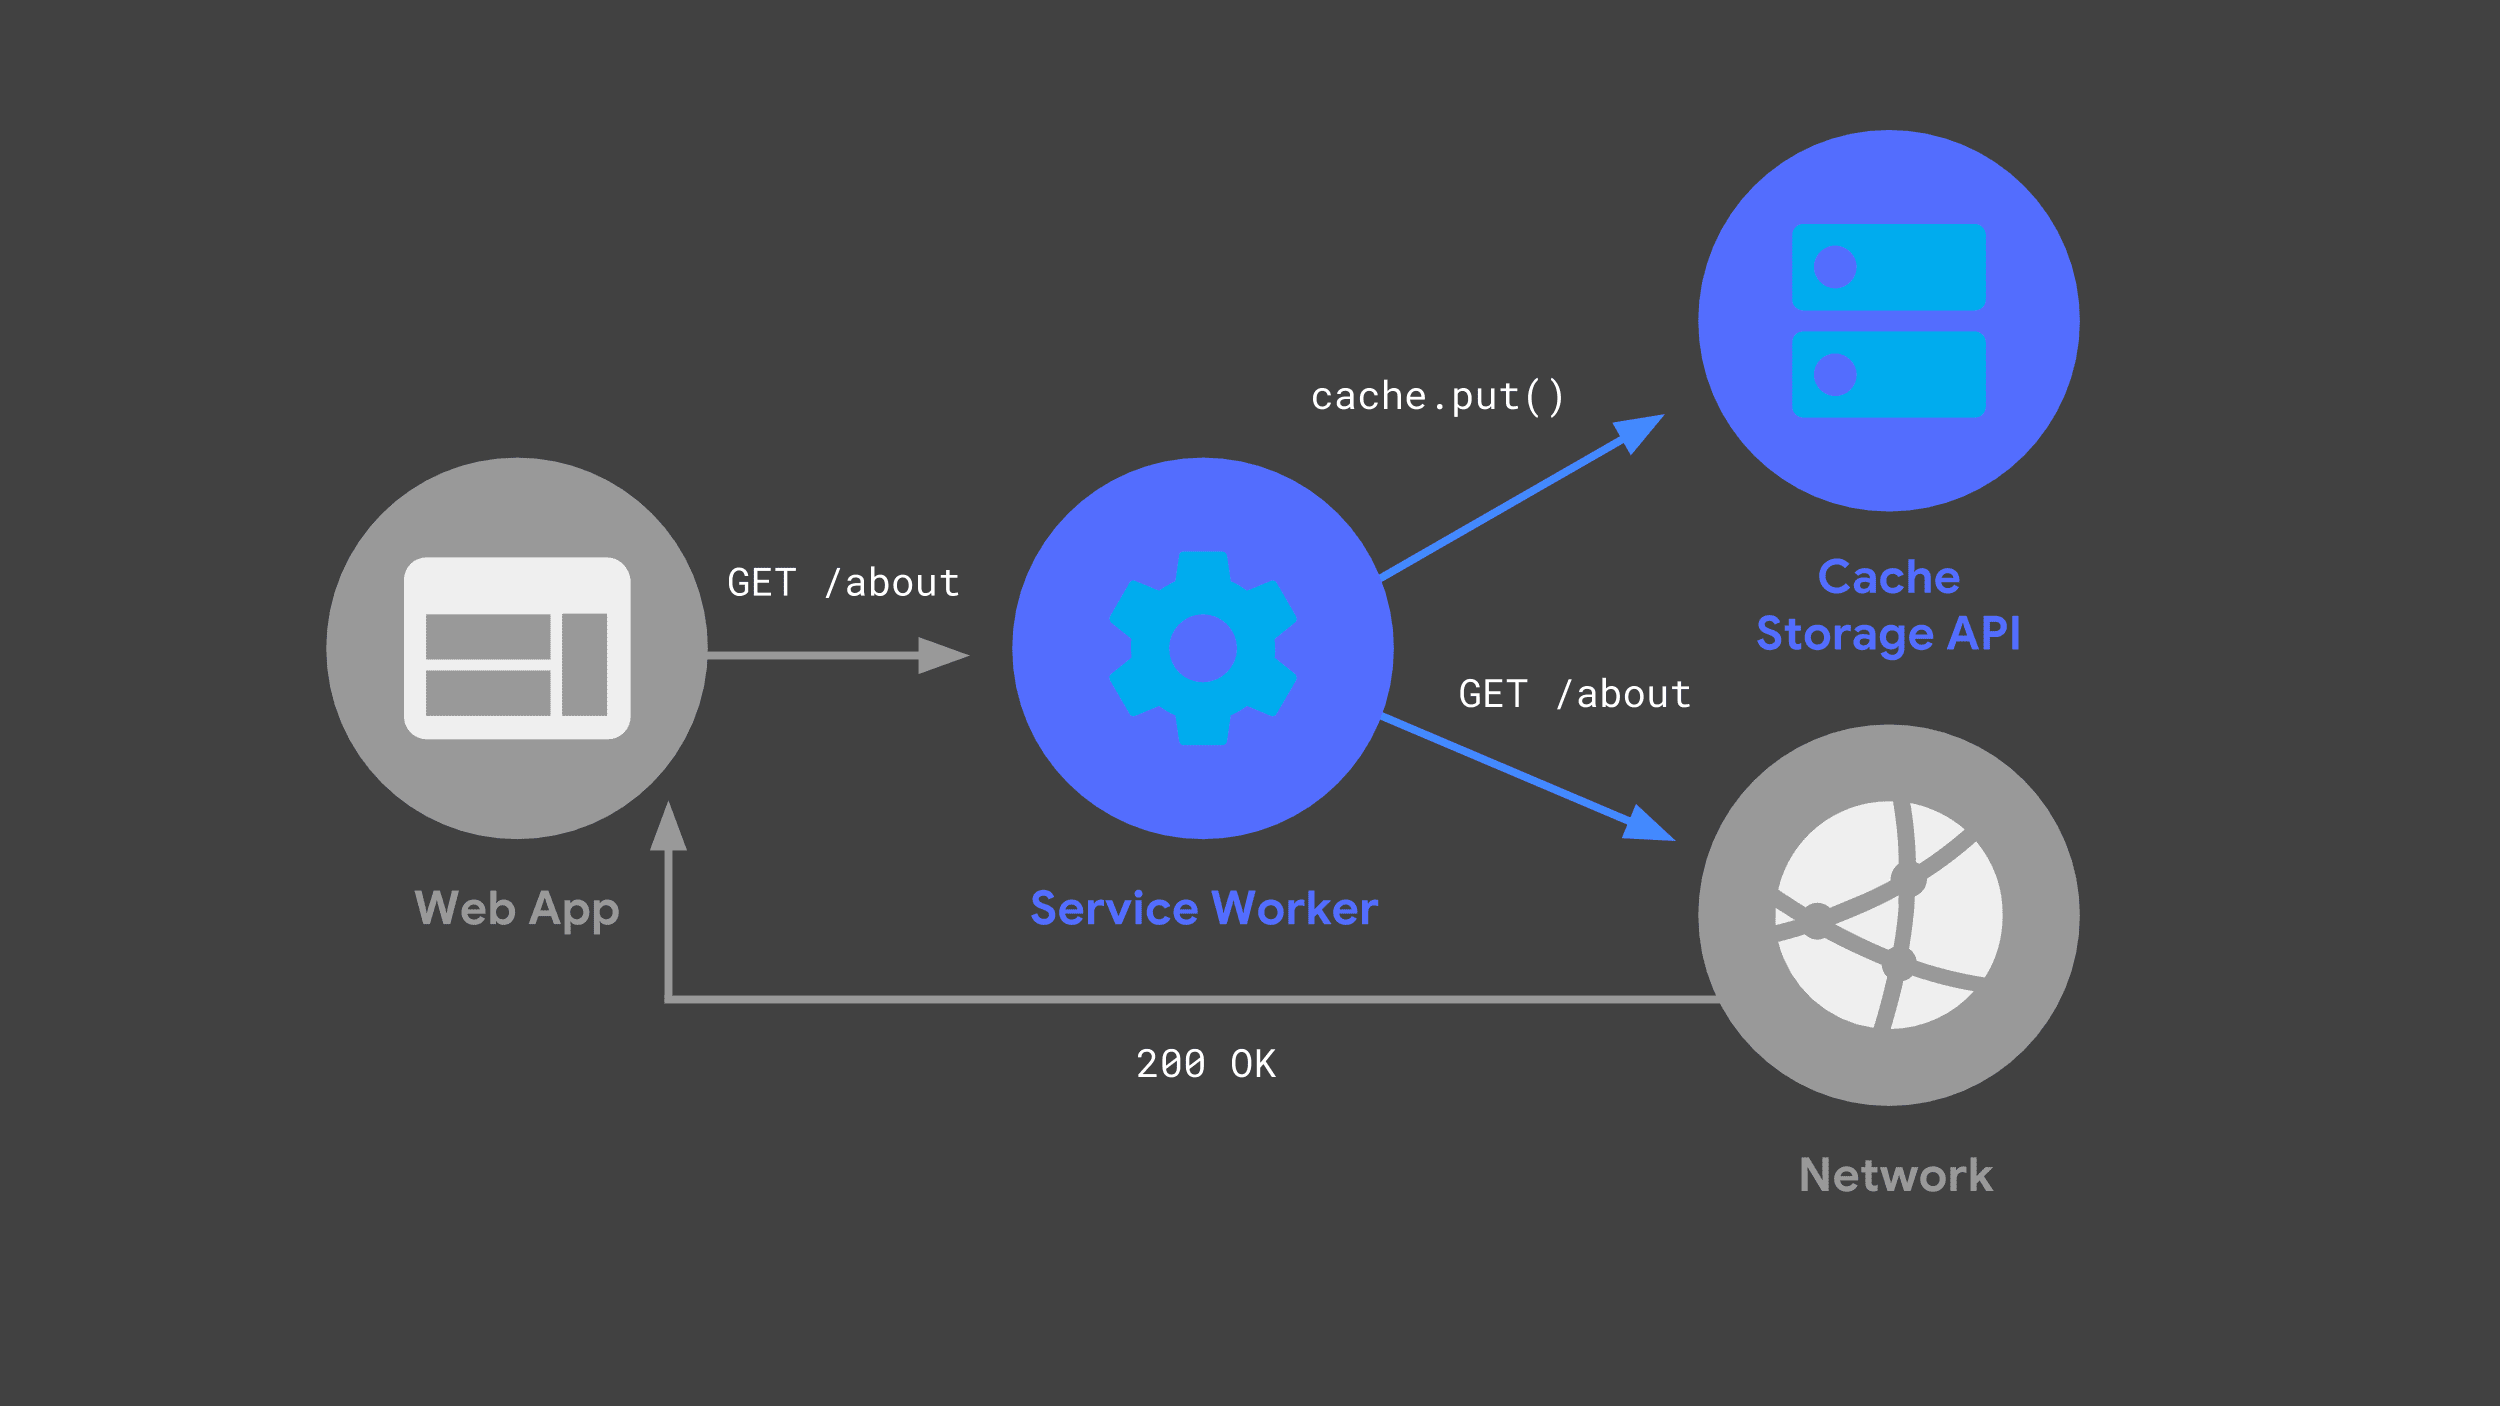 使用 Cache Storage API 儲存網路回應副本的 Service Worker。